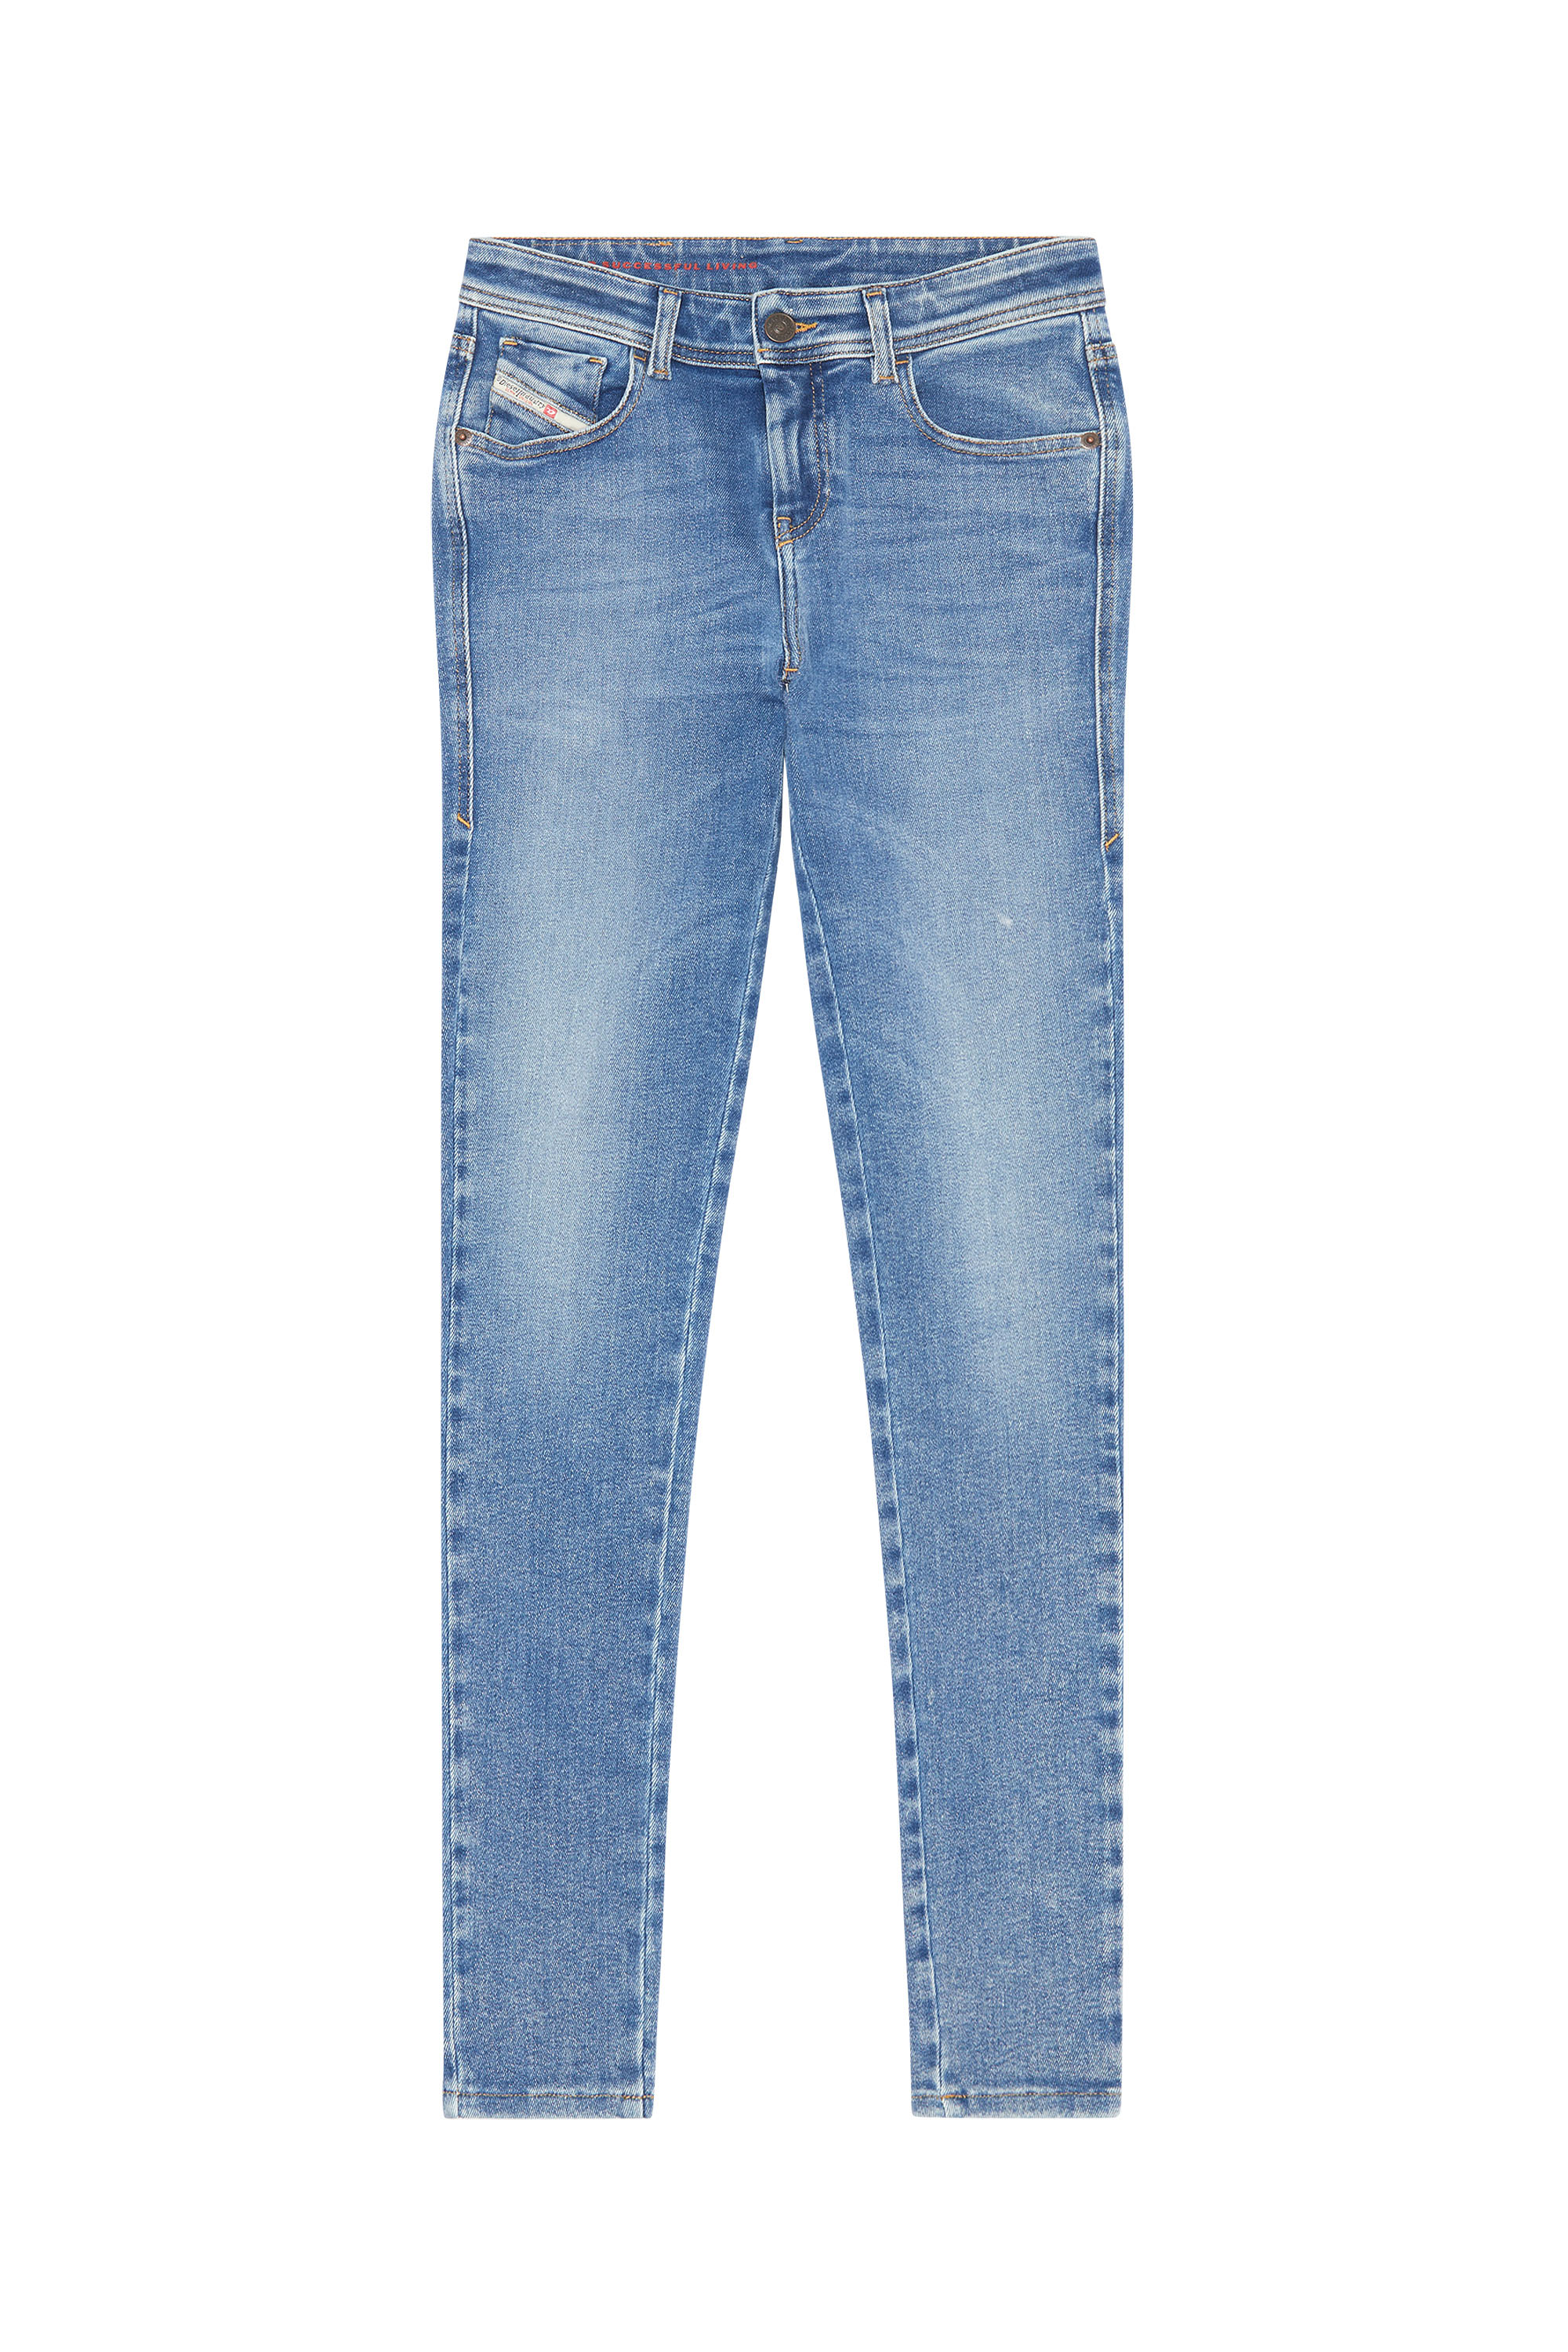 Super skinny Jeans 2017 Slandy 09D62, Mittelblau - Jeans